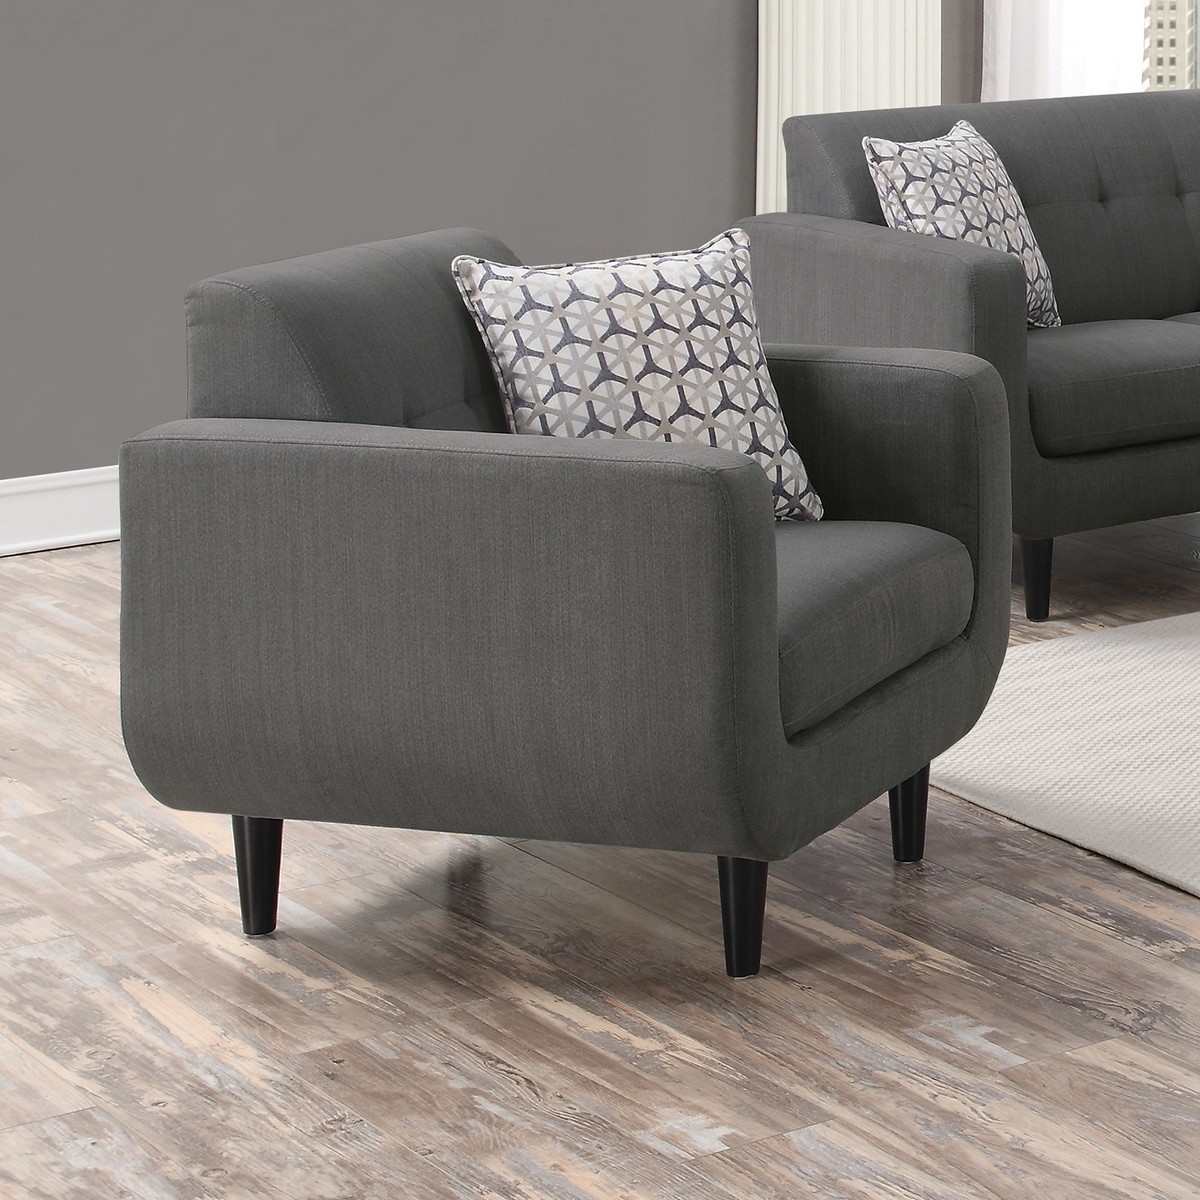 Coaster Stansall Chair - Grey